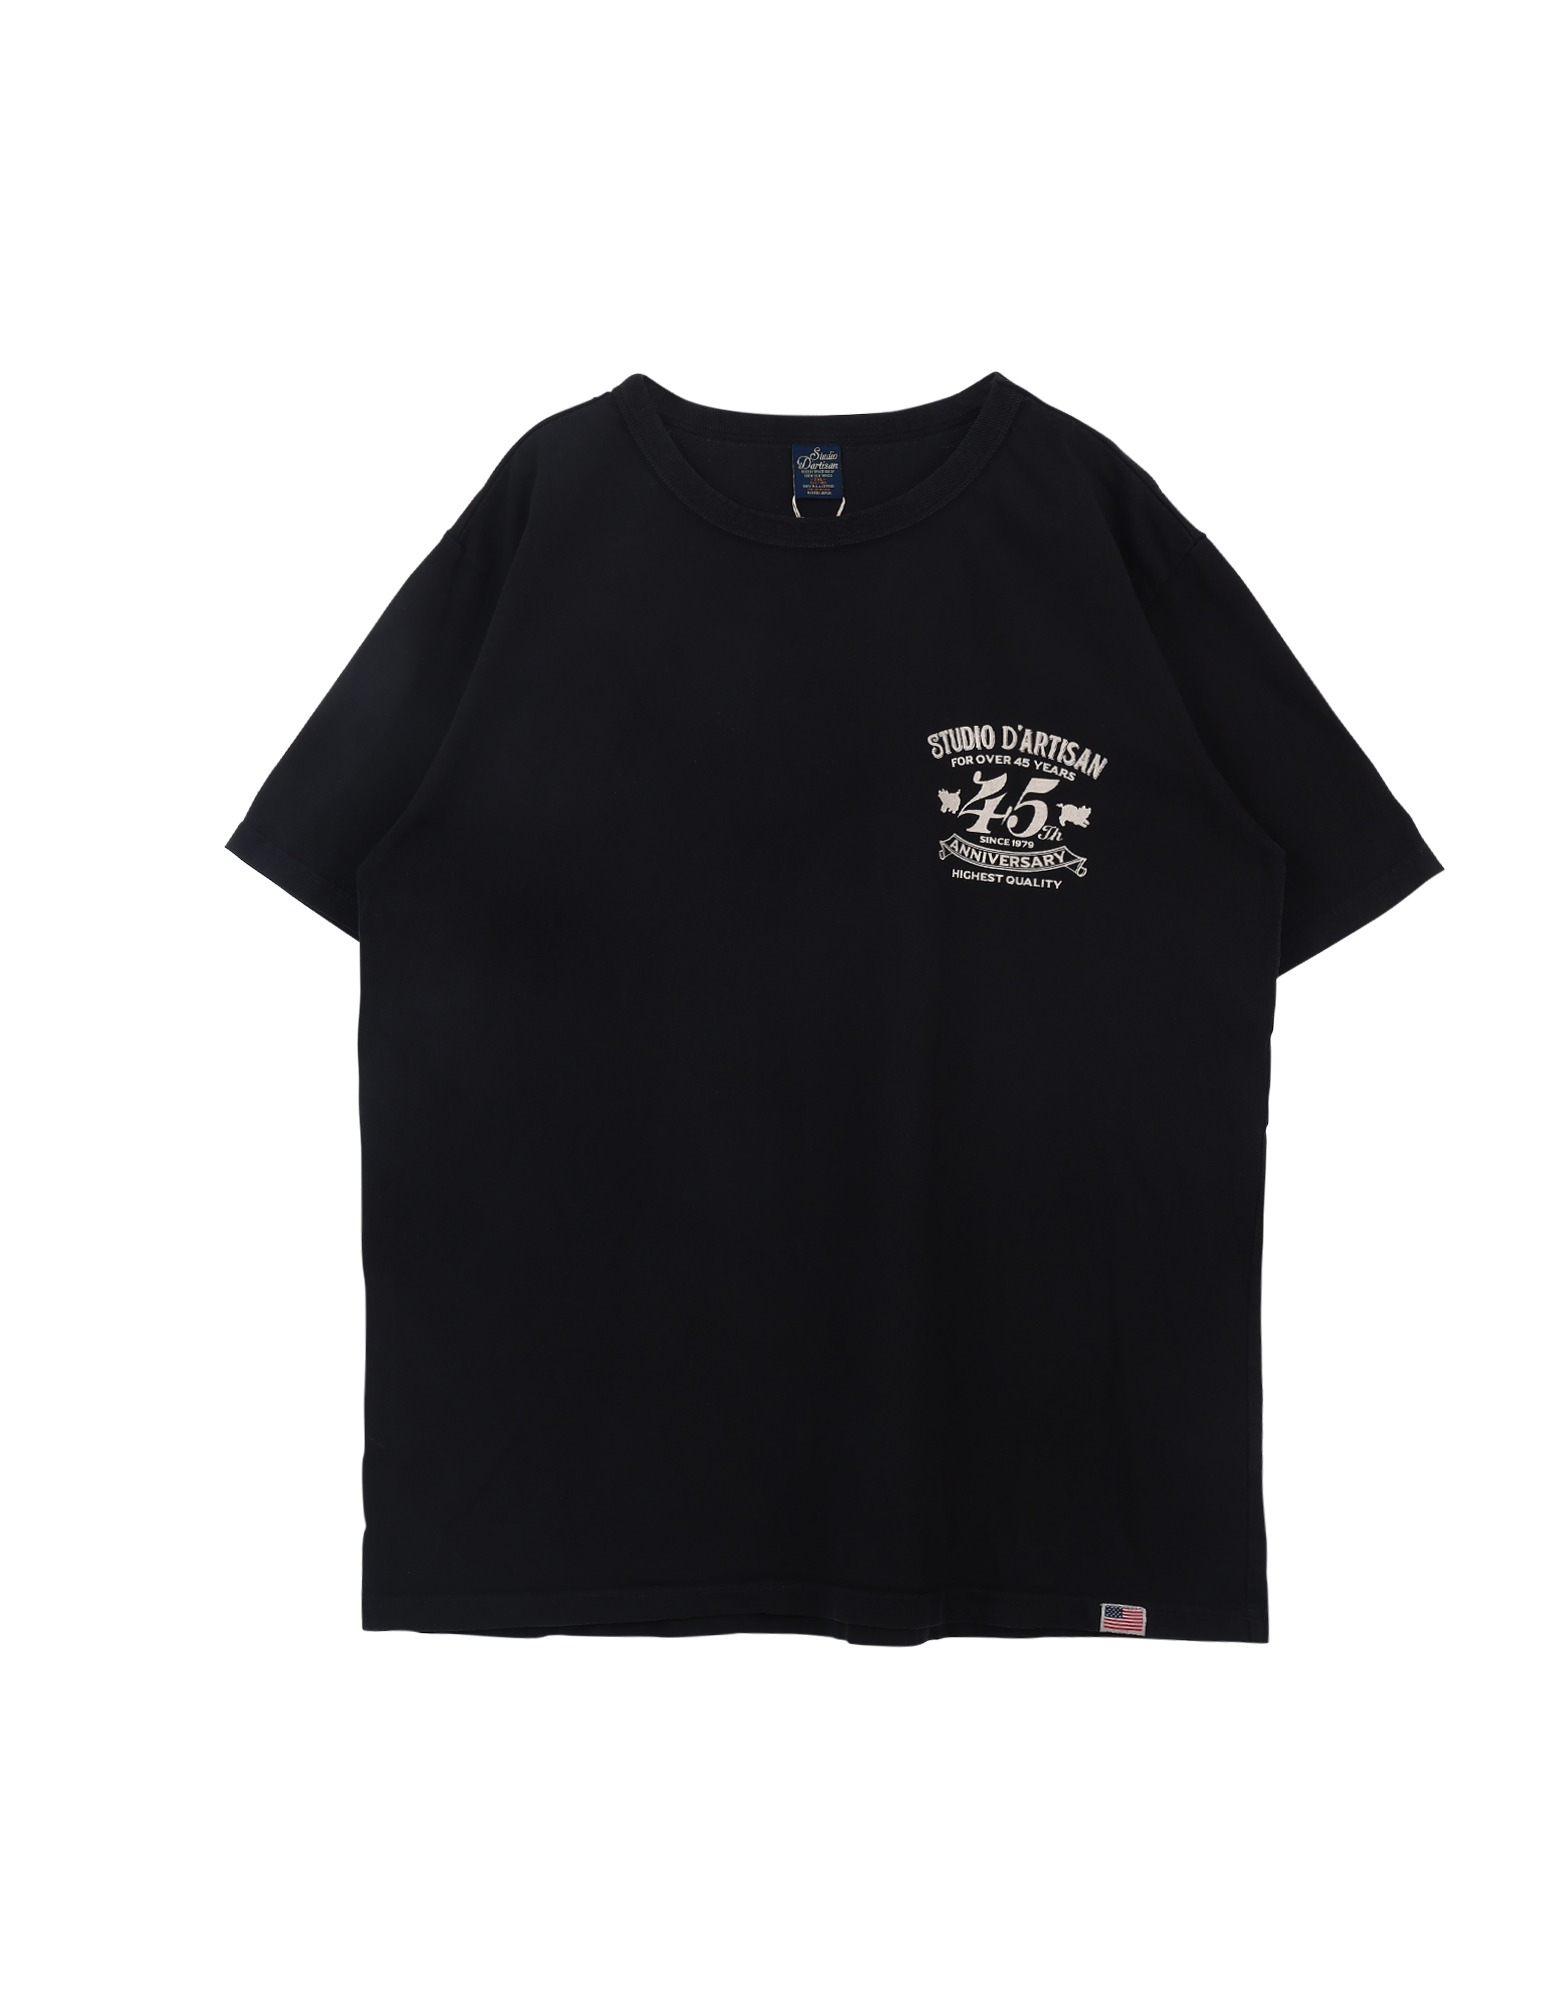 SP-095 45th USA cotton print T-shirt (Black)